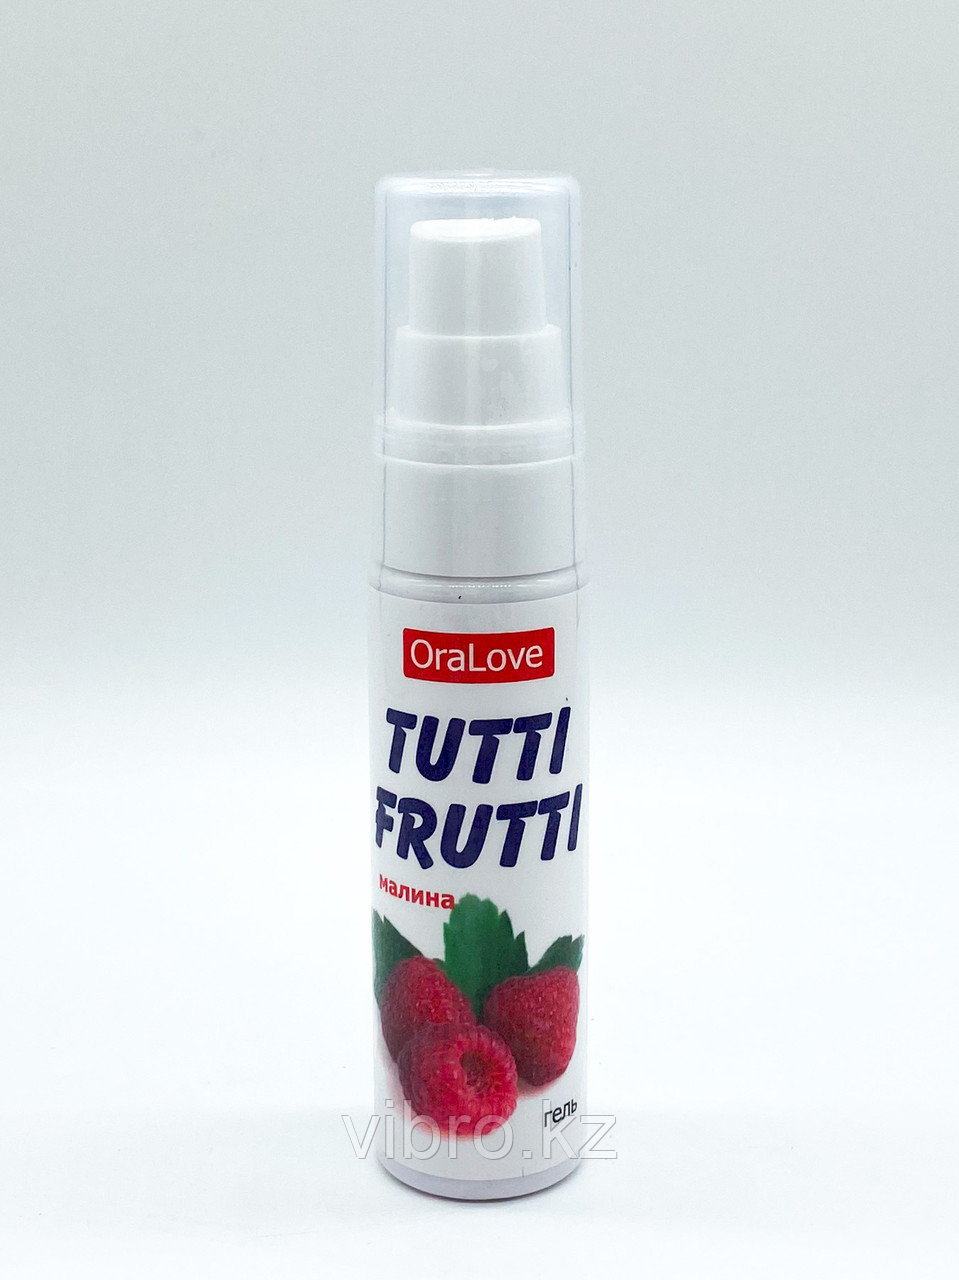 Съедобный Гель-лубрикант "Tutti Frutti" со вкусом малины. 30мл